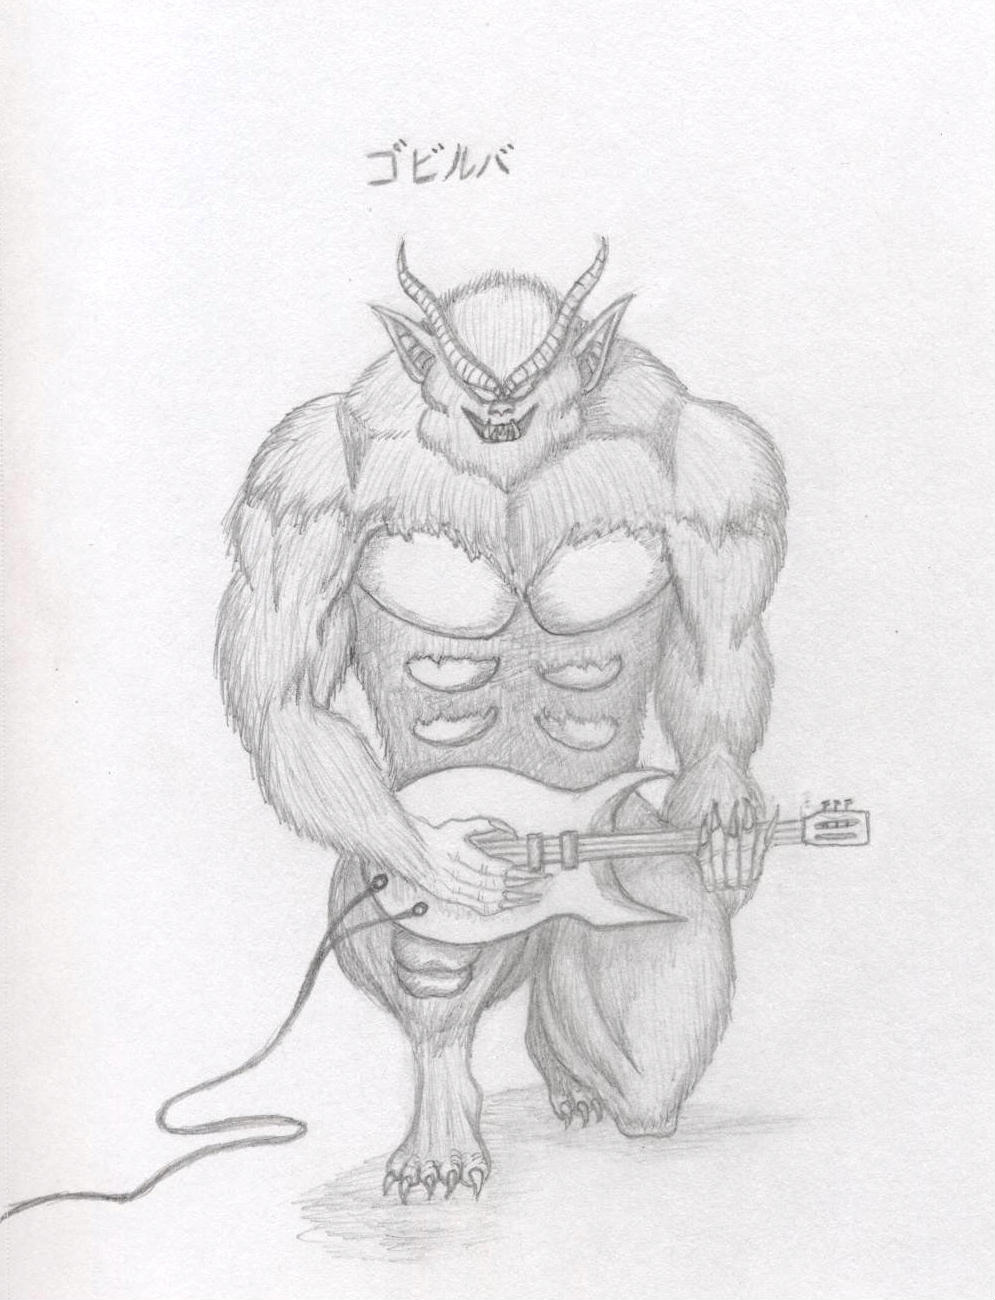 Gobilva Guitarist by Ran_The_Hyena